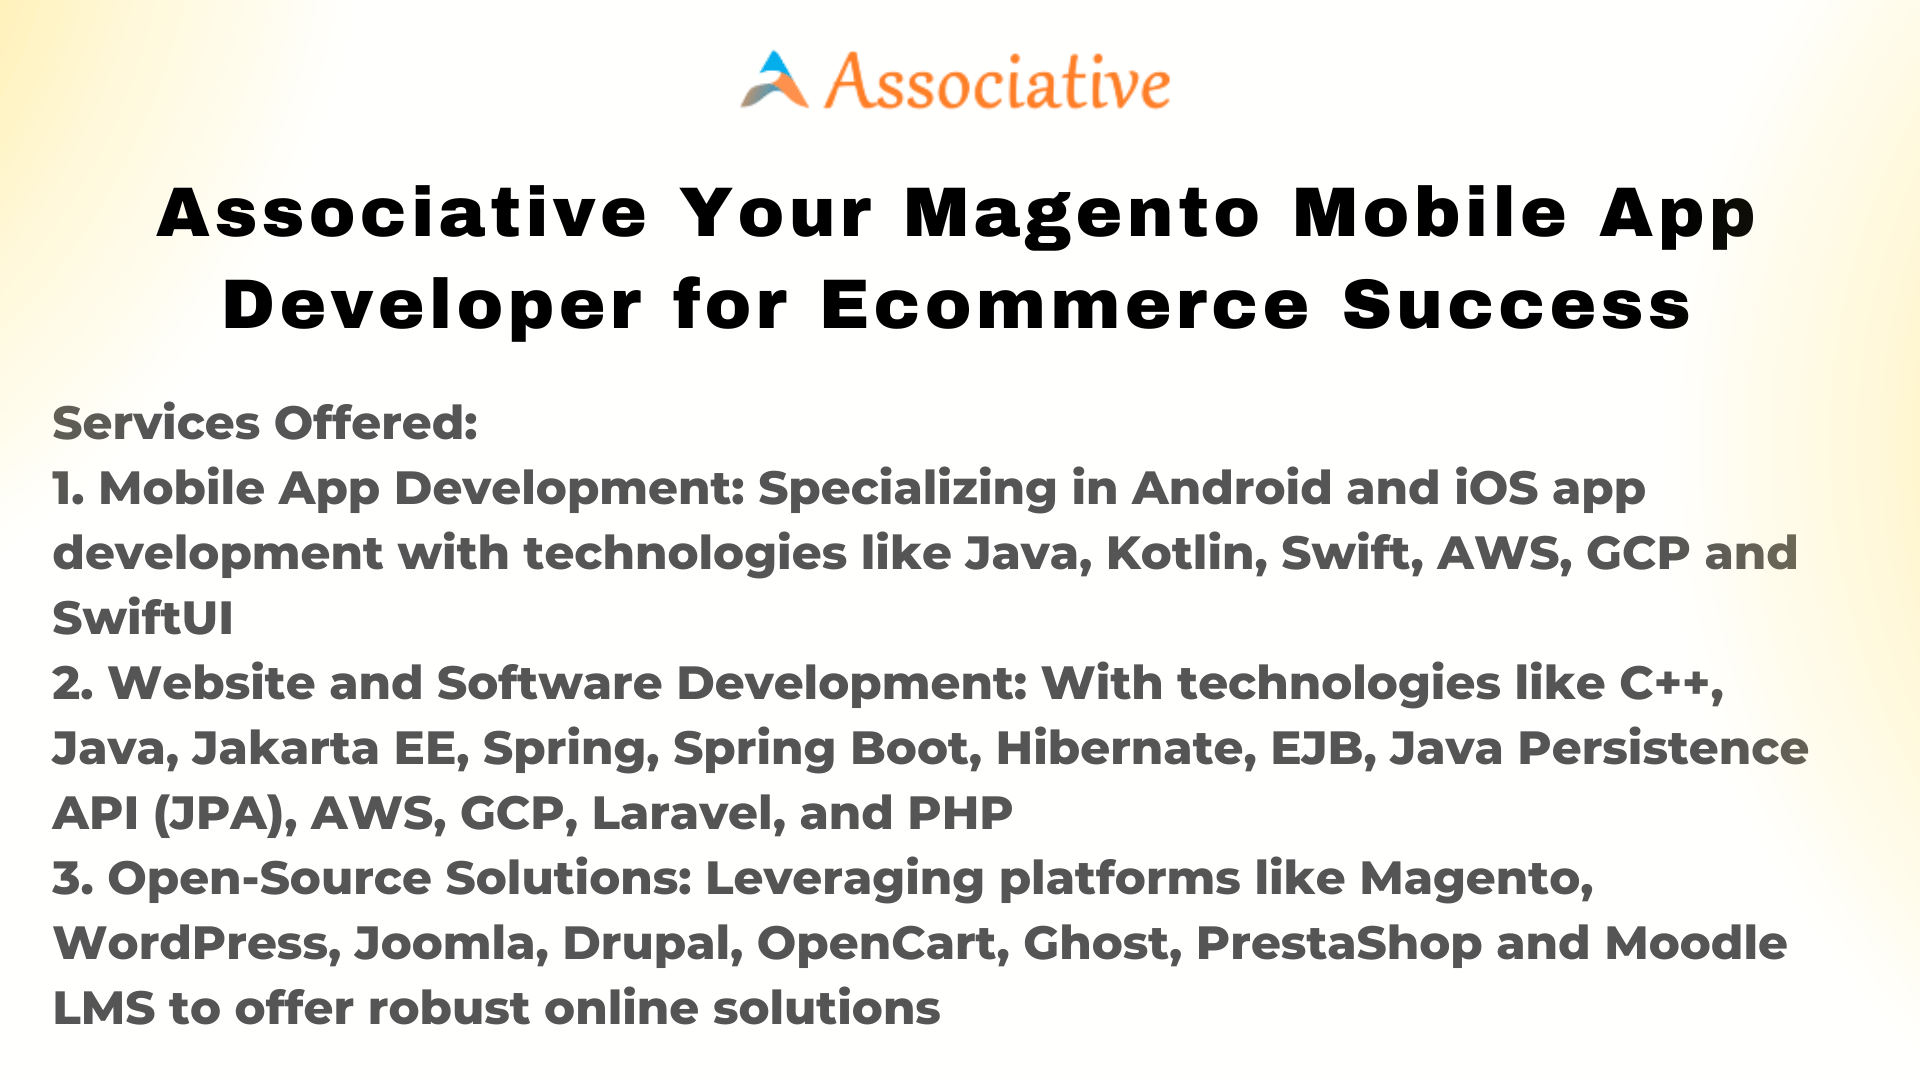 Associative Your Magento Mobile App Developer for Ecommerce Success